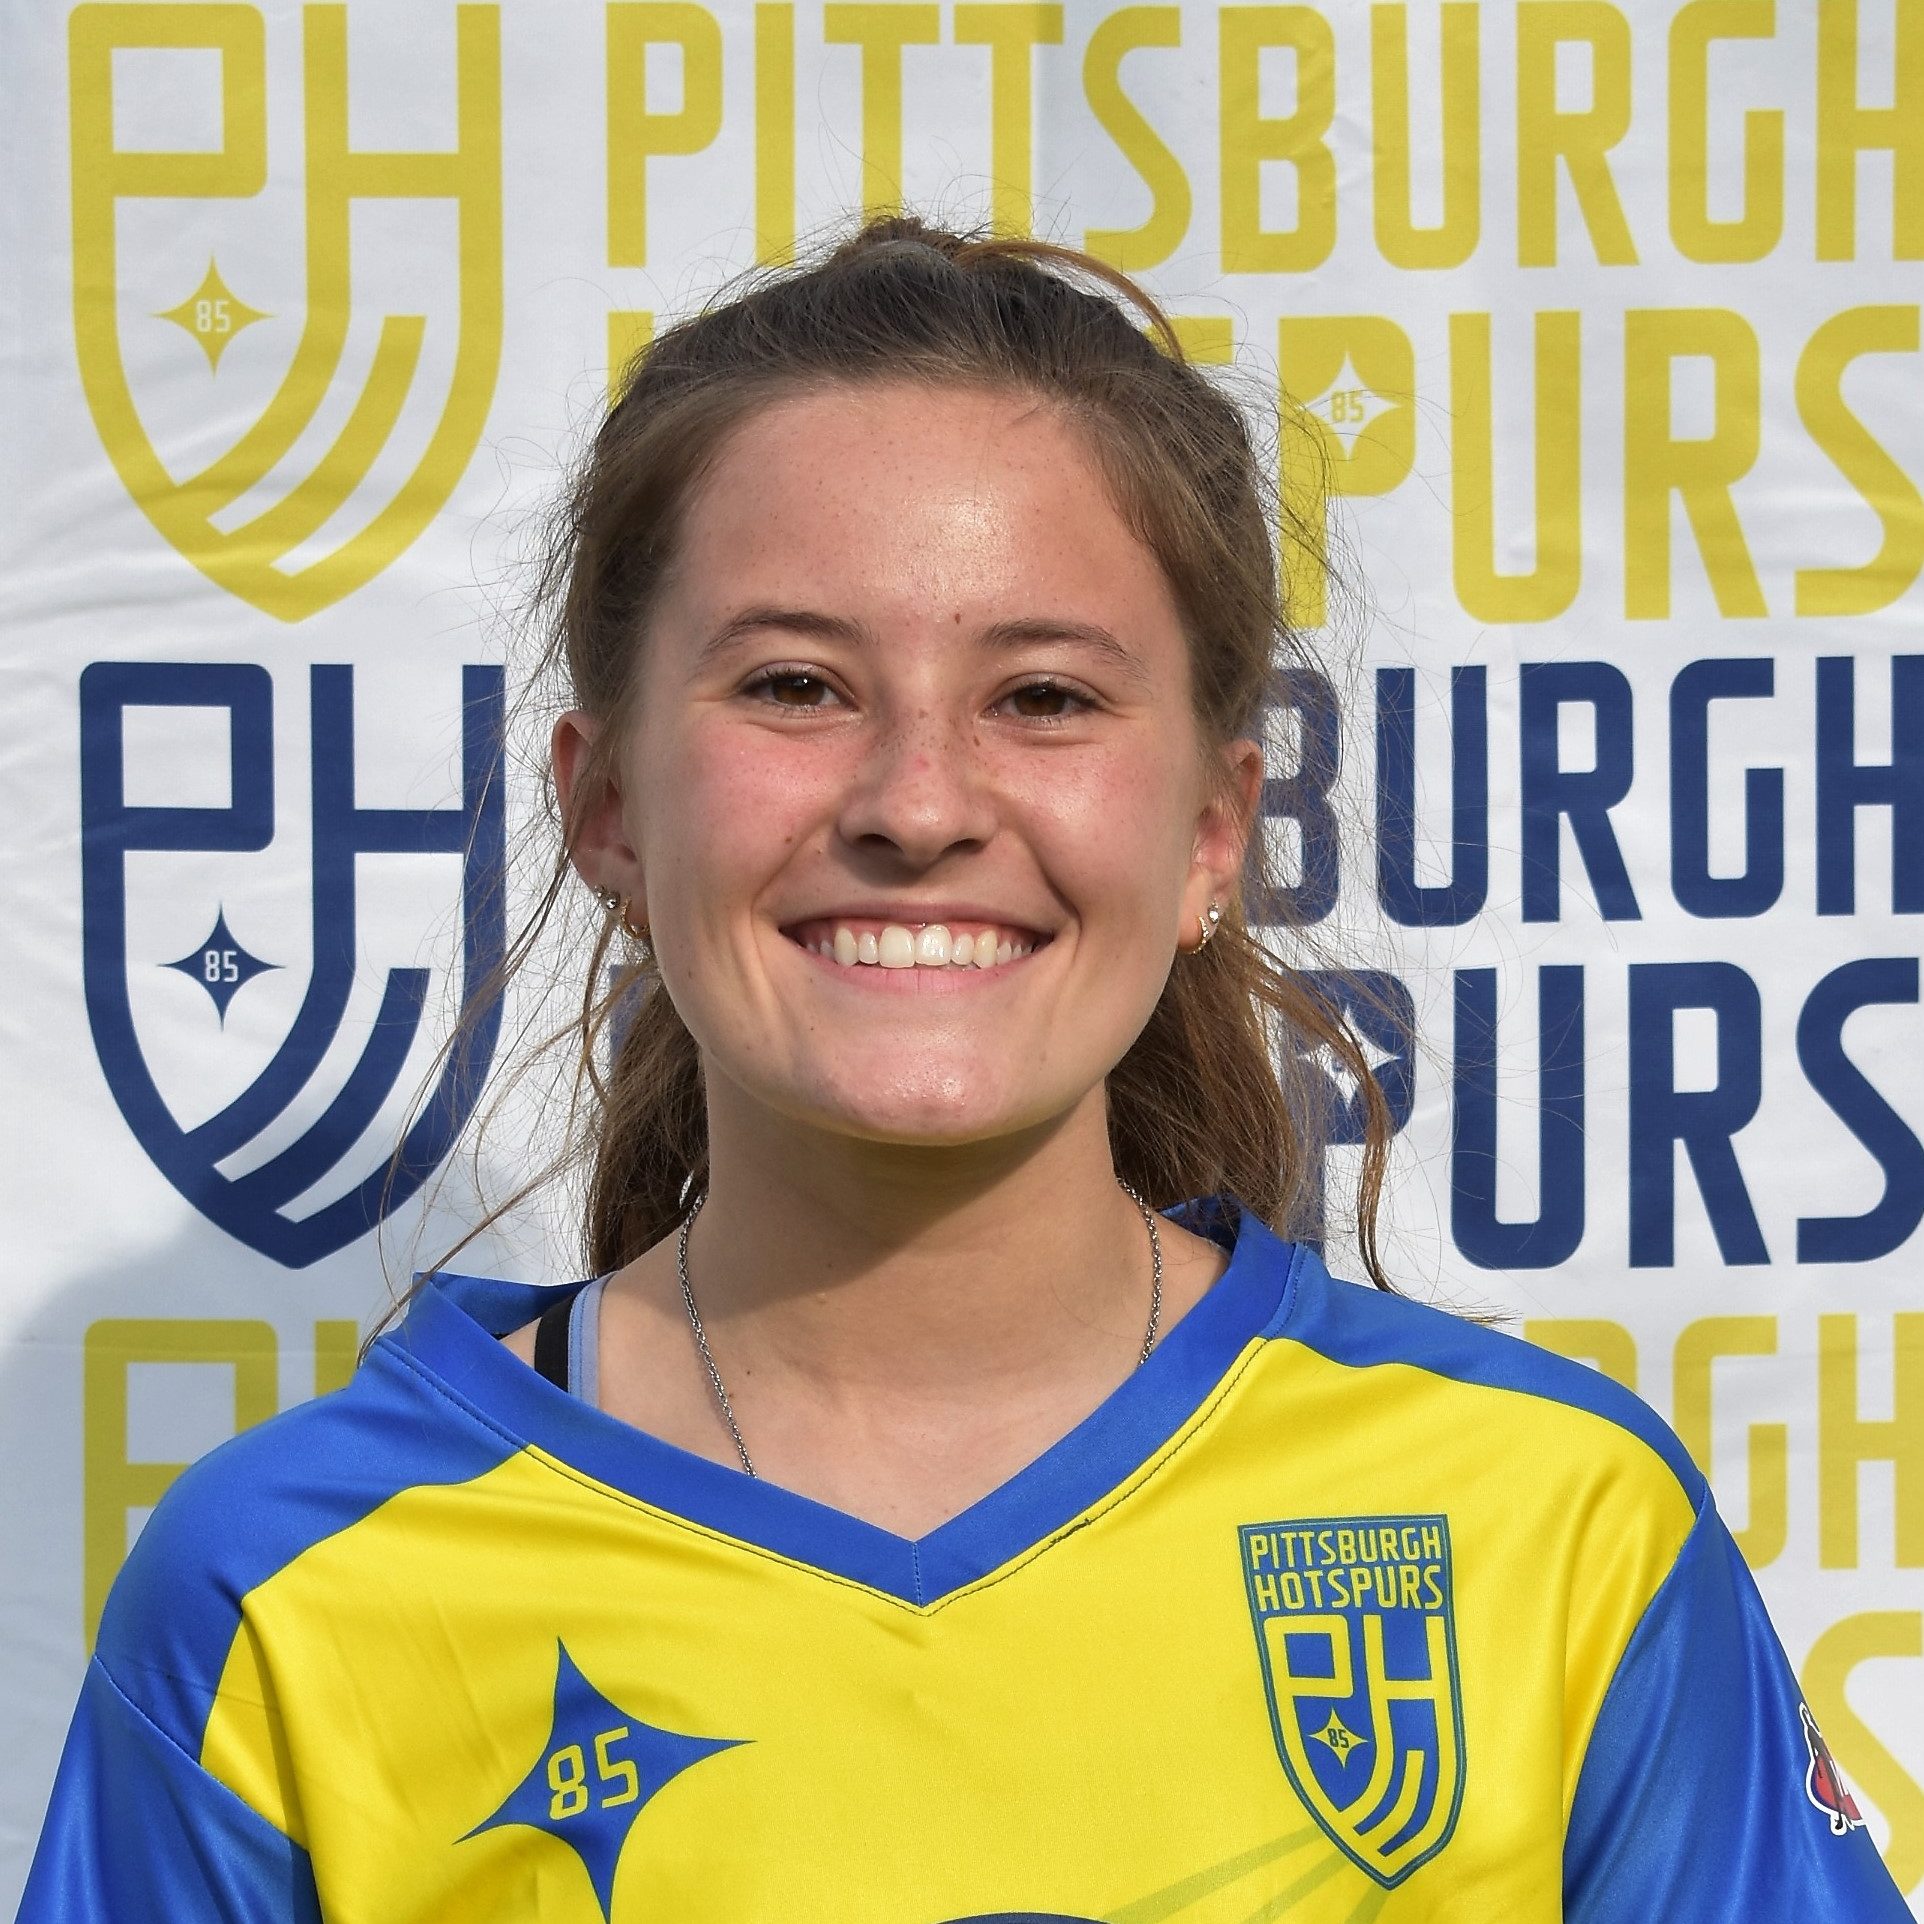 Morgan Kost - Pittsburgh Hotspurs (2)